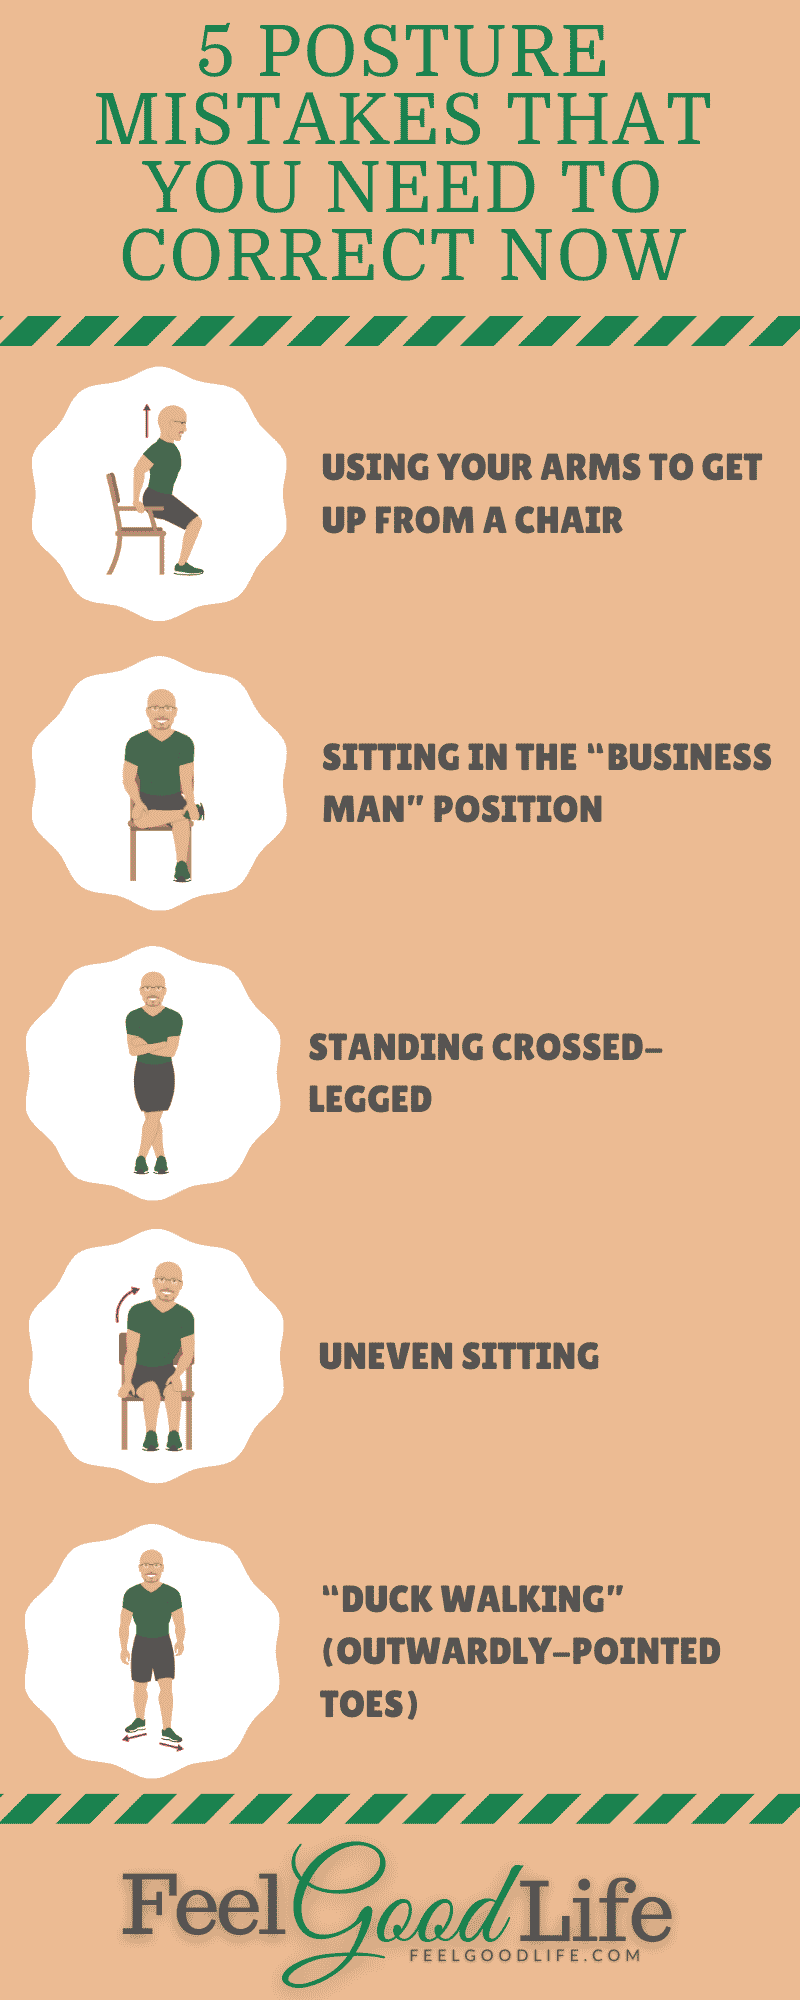 5 Posture Mistakes Seniors Should Avoid